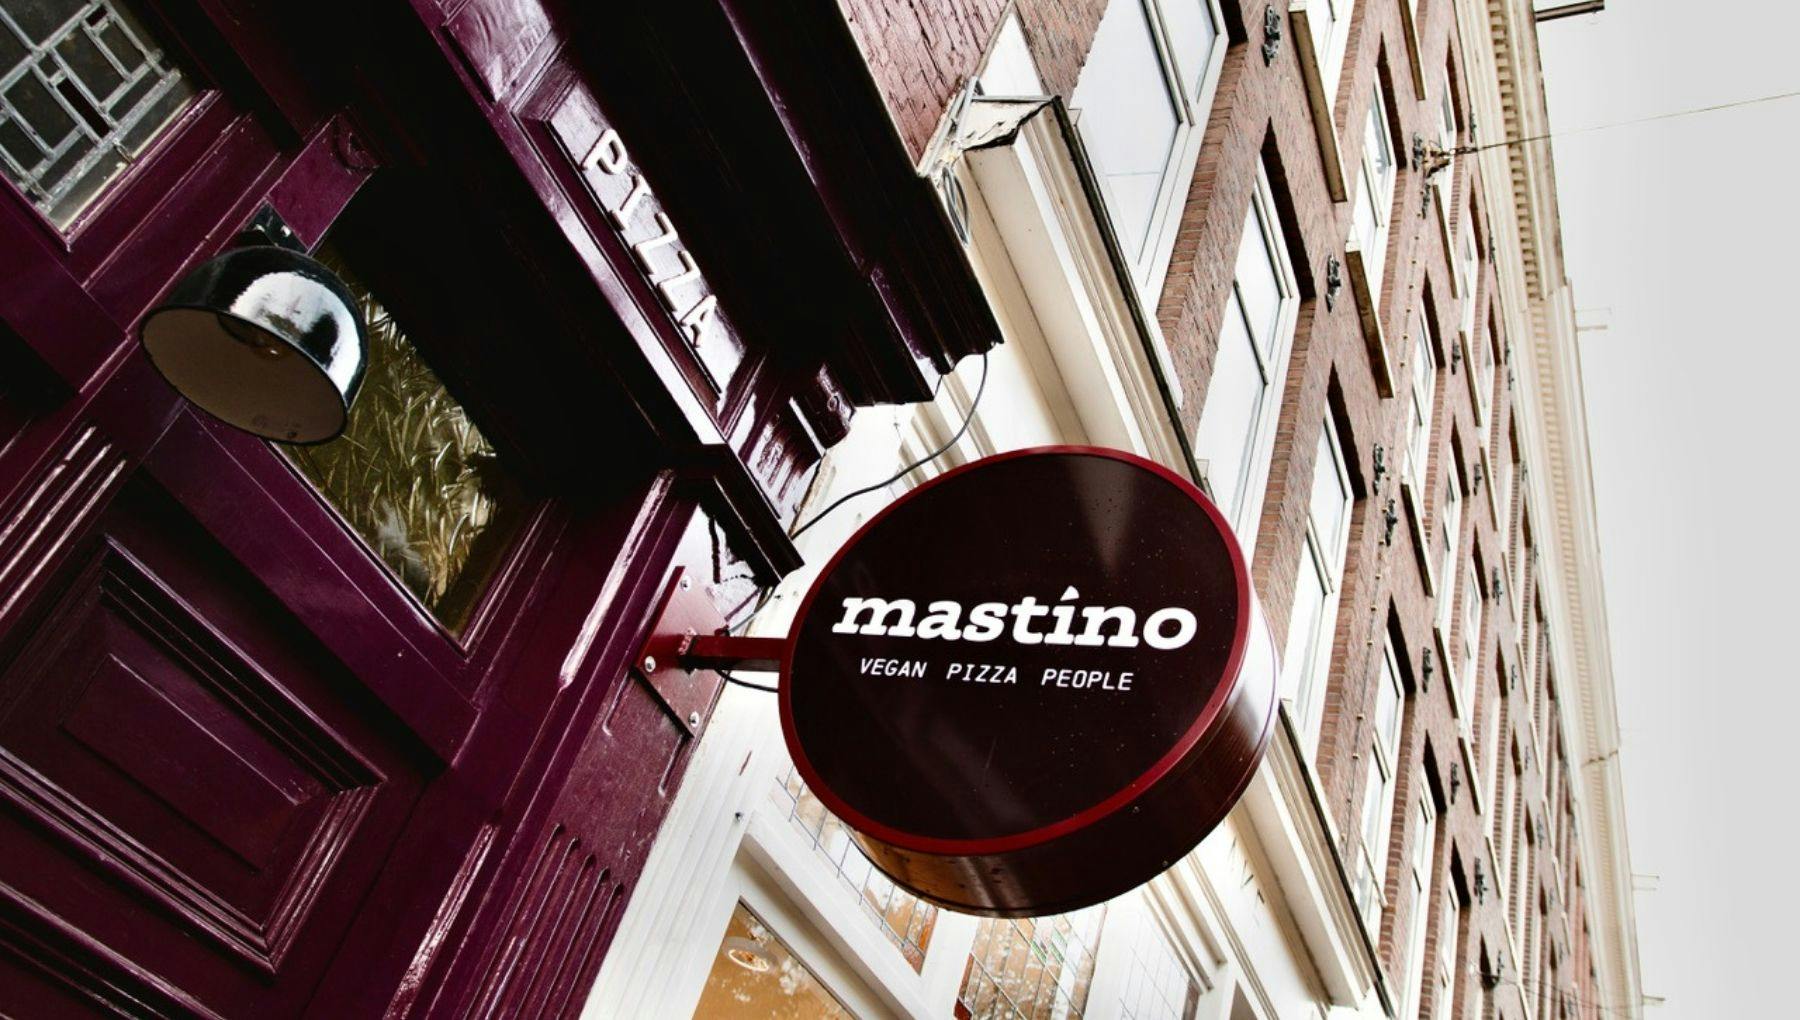 Mastino restaurant exterior logo